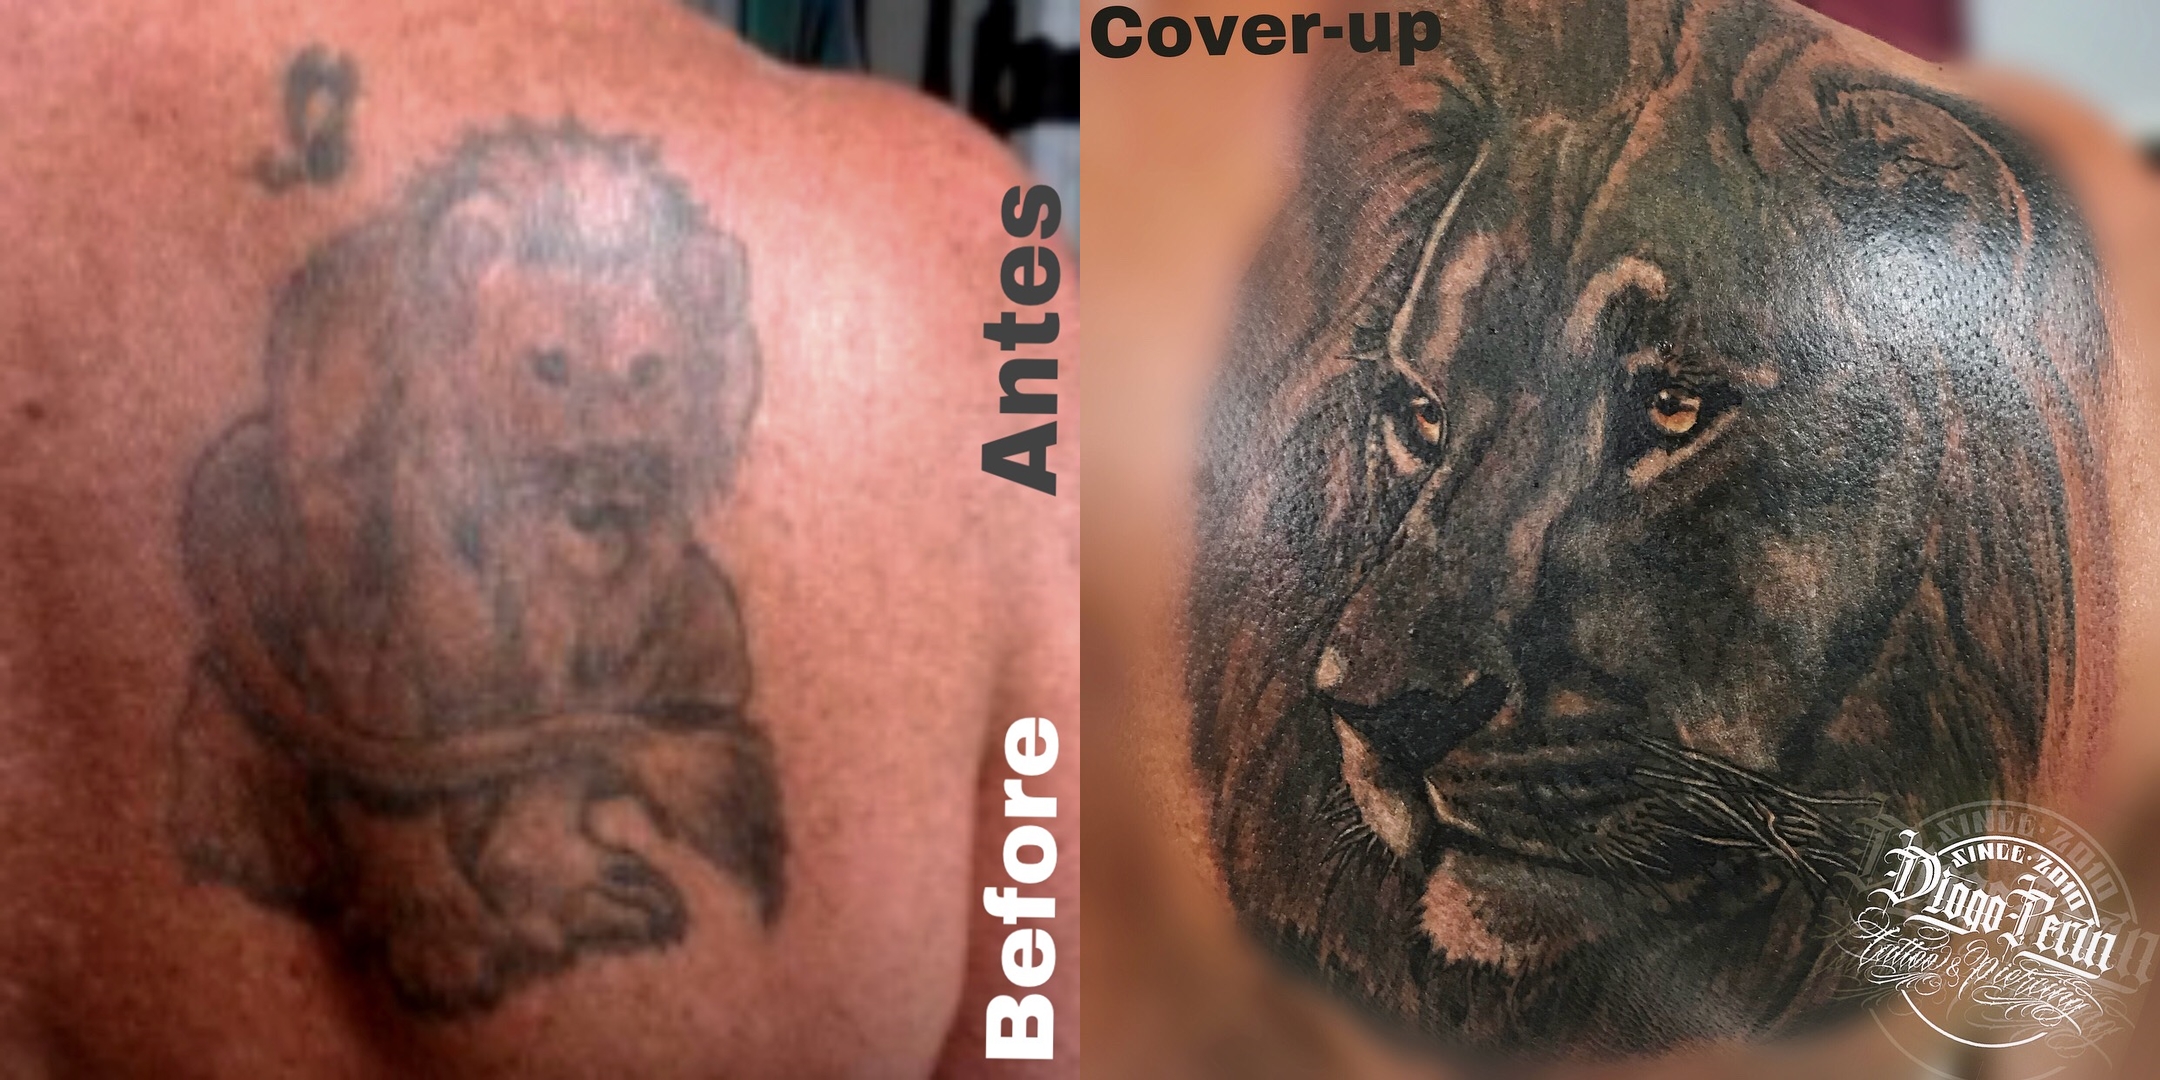 Tattoo realizado por @diogoperin #lion #realism #coverup #tattoospain #tattooalicante #tattoosantapola #thebest #animals